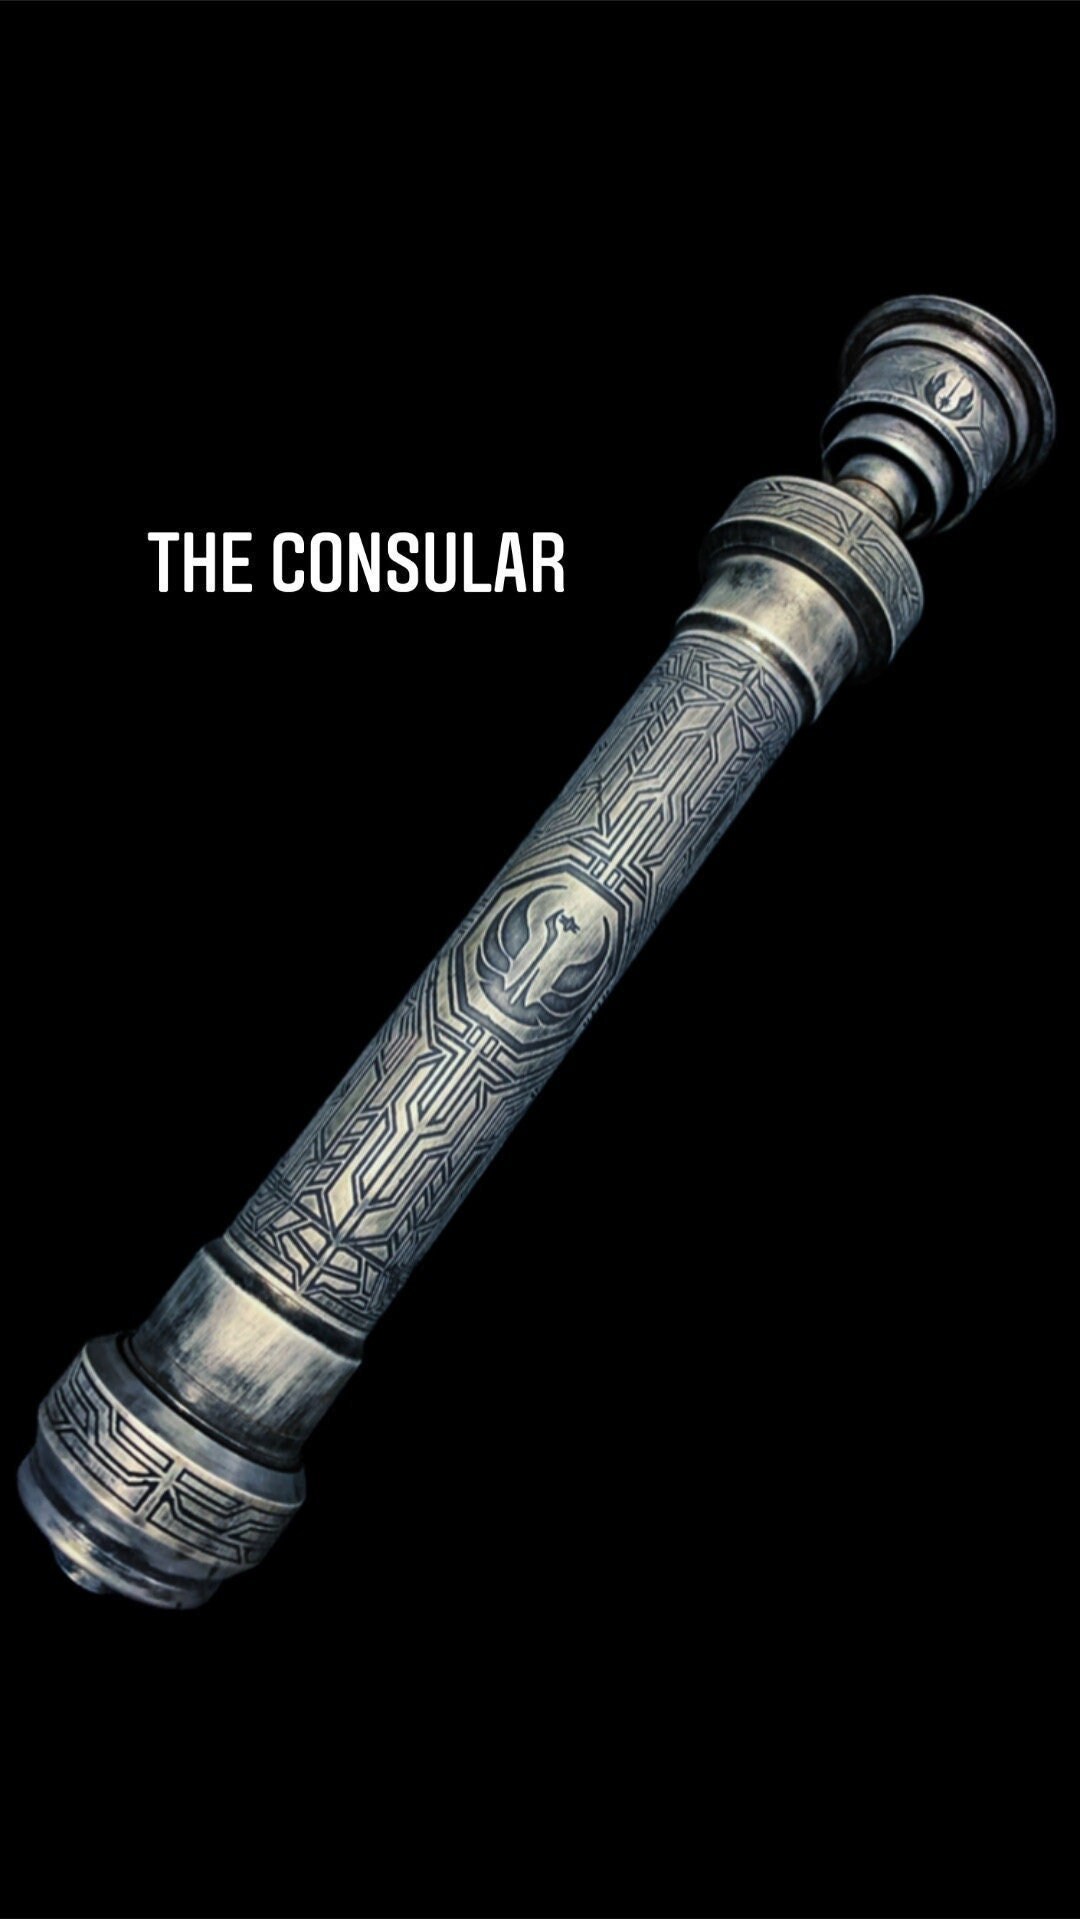 Consular Lightsaber